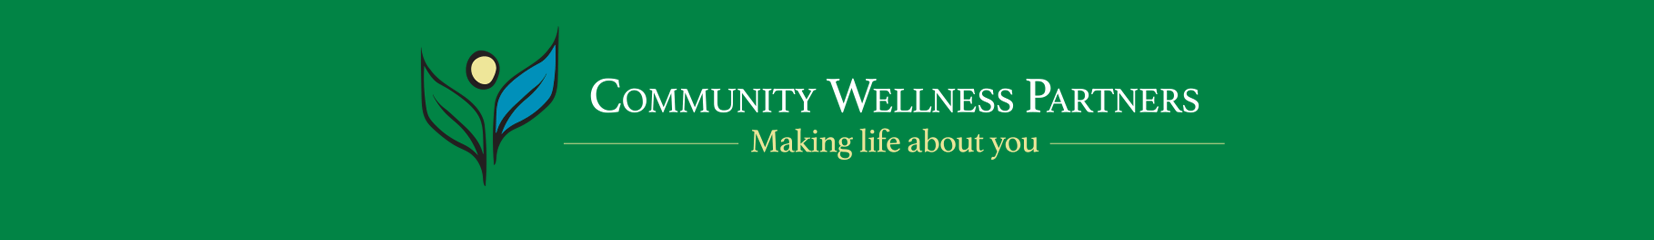 Community Wellness Partners